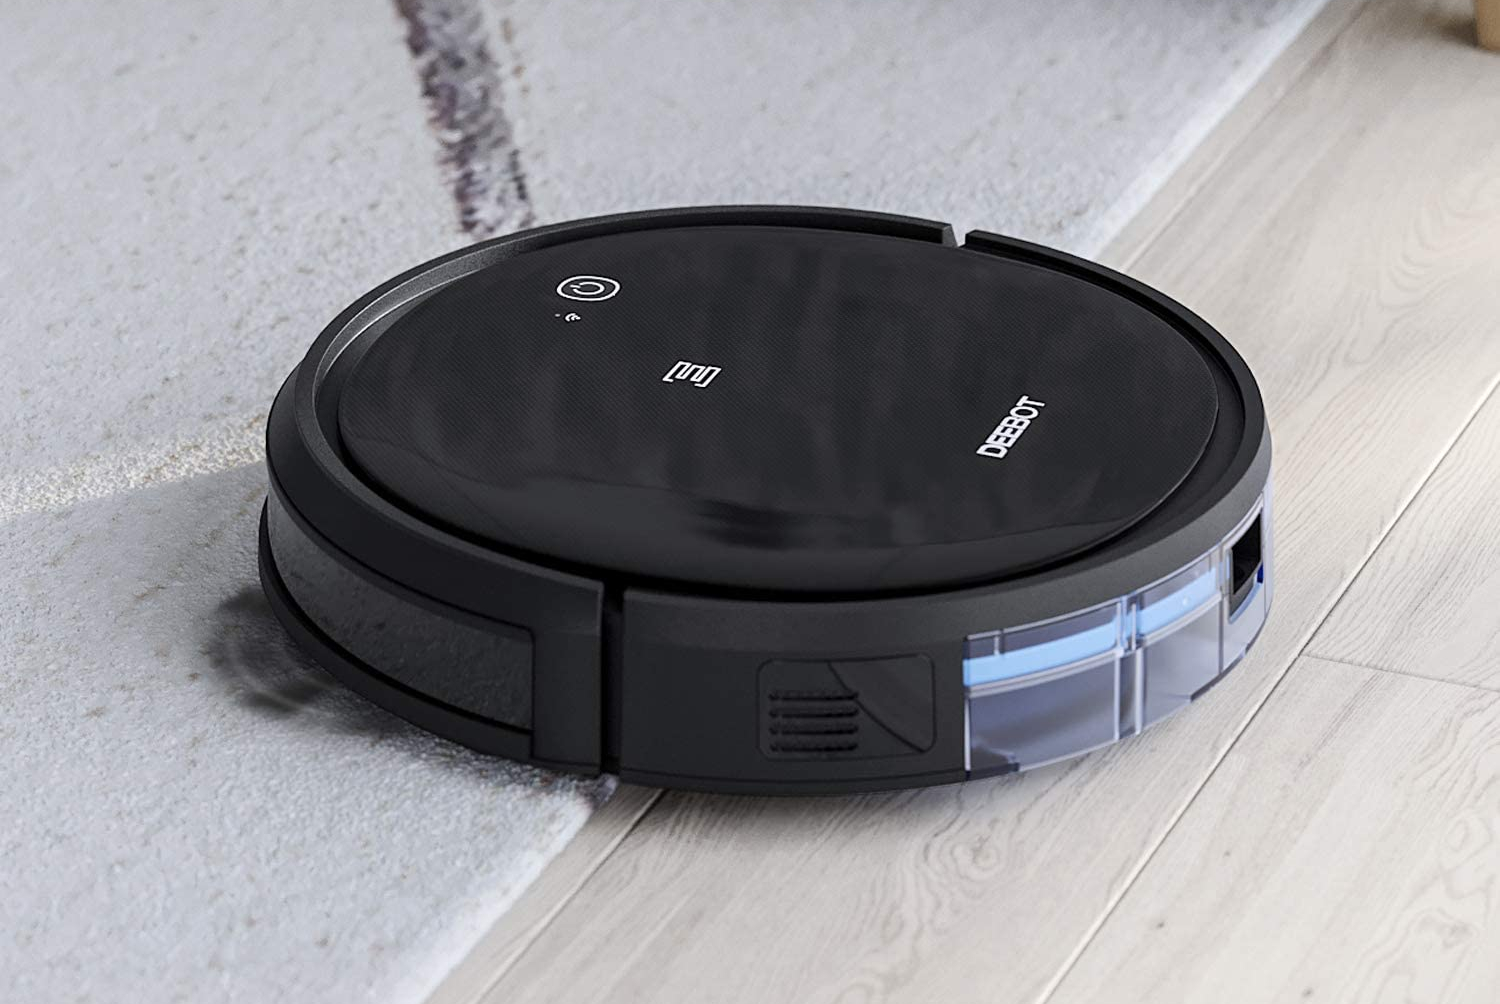 Best Memorial Day Robot Vacuum Deals 2020: Eufy and Roomba